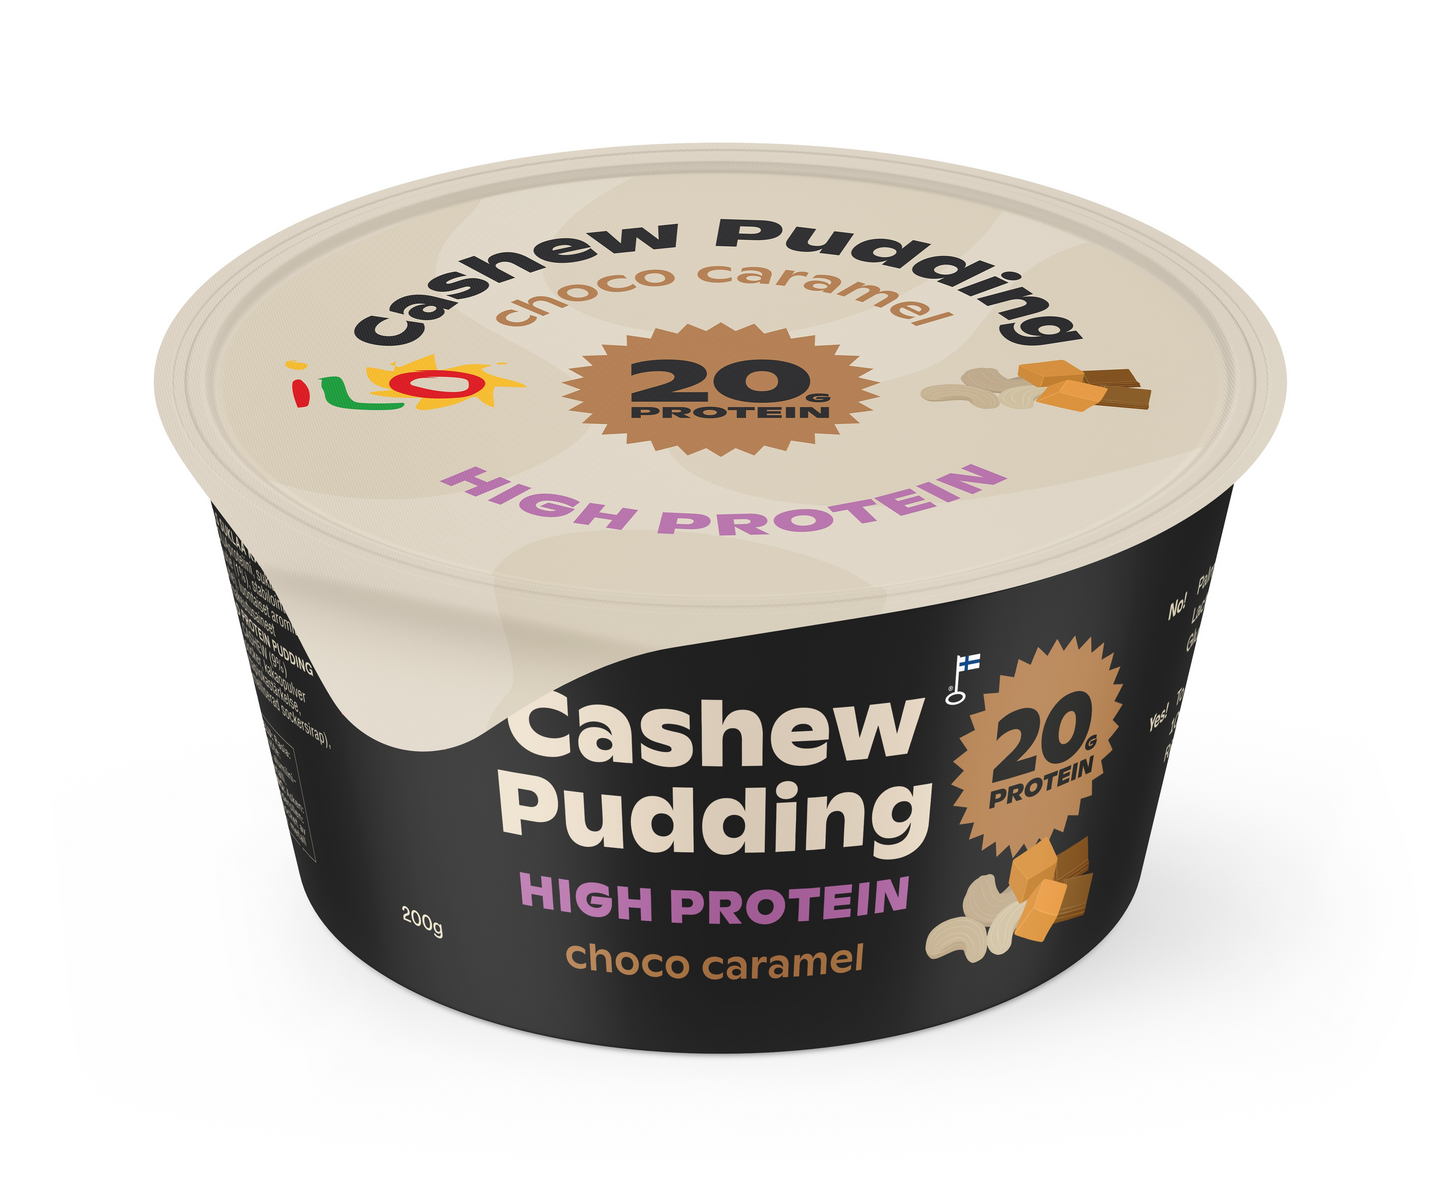 Ilo Cashew pudding high protein choco caramel 200g